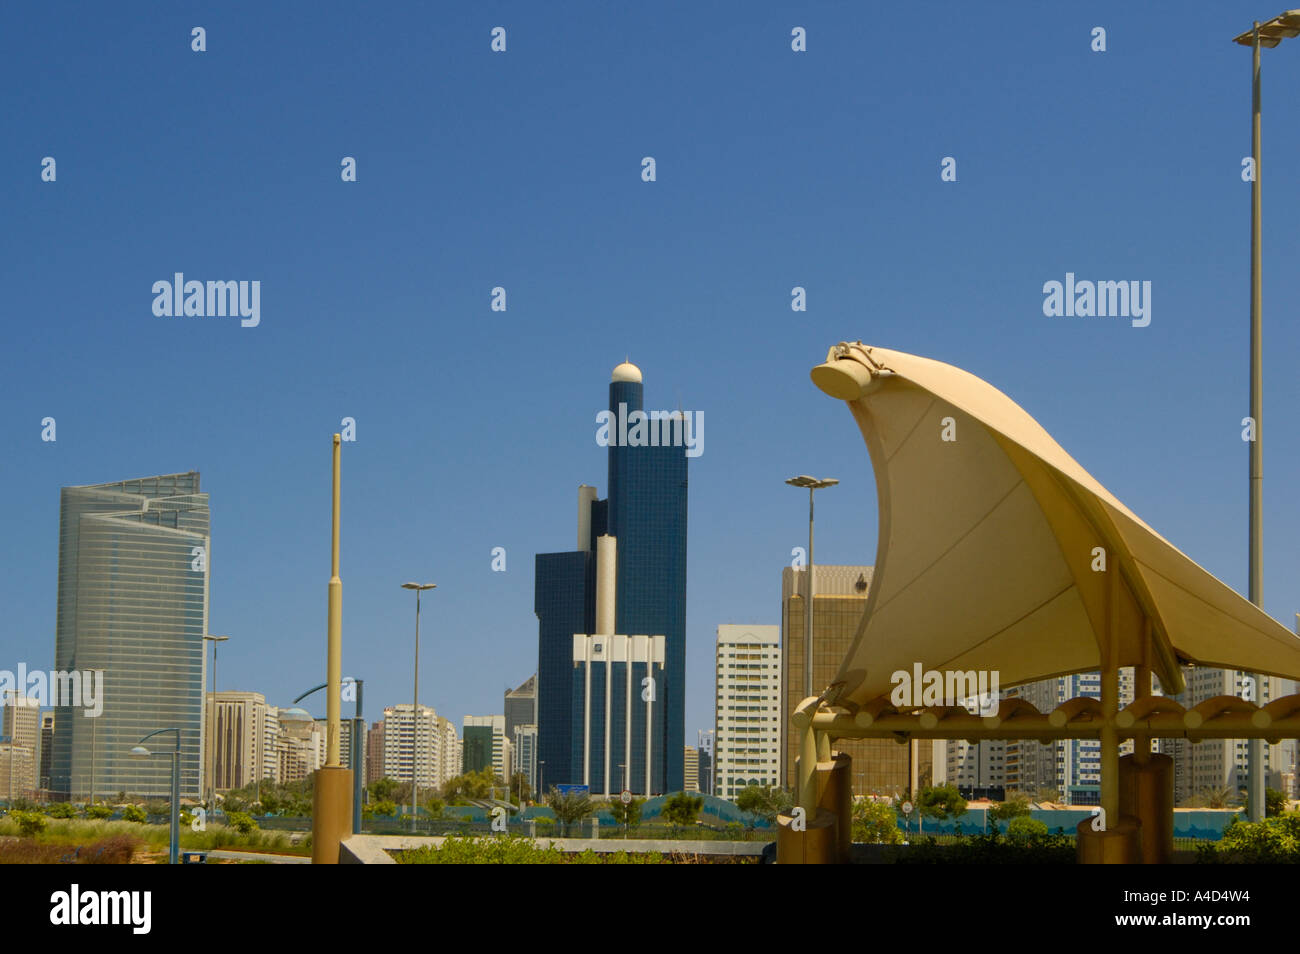 Corniche with modern high rise buildings and futuristic sun shade Abu Dhabi UAE Stock Photo